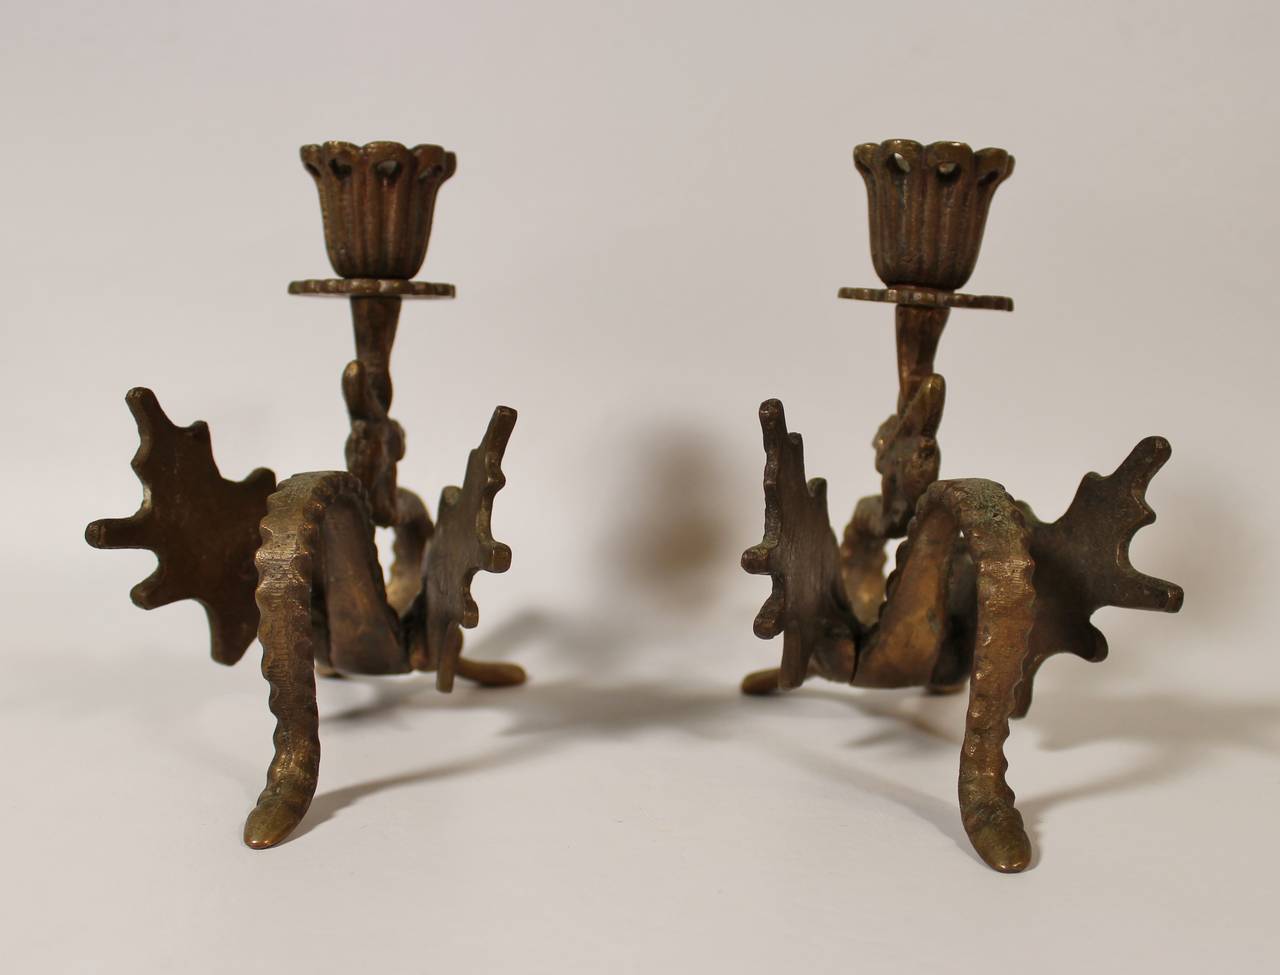 antique dragon candle holder